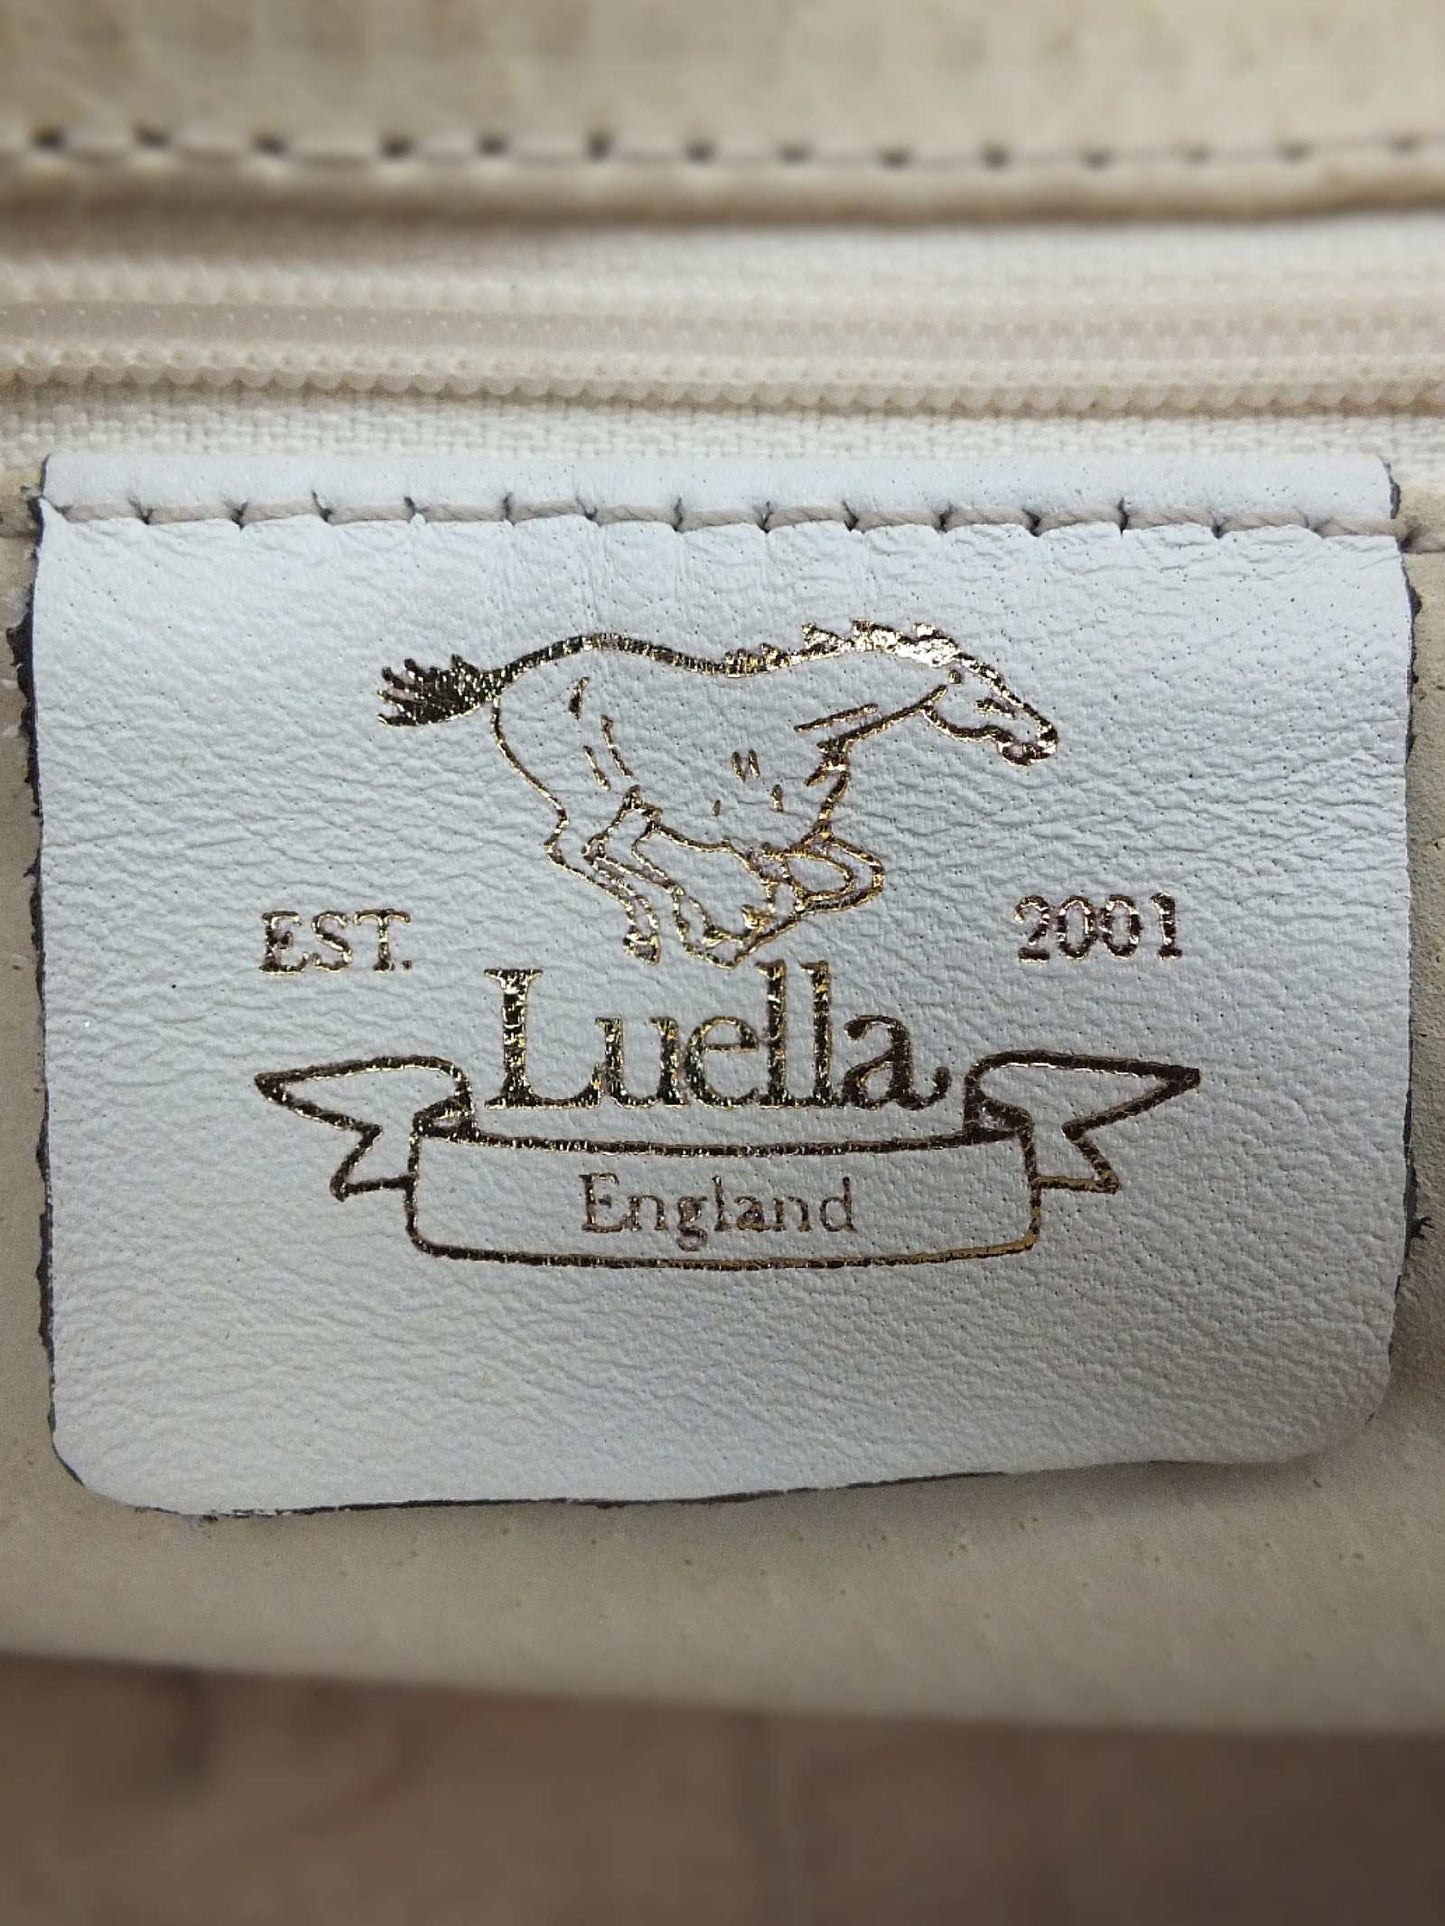 English Classics - Pre-Loved Luella White Leather Handbag Tote Shoulder Bag